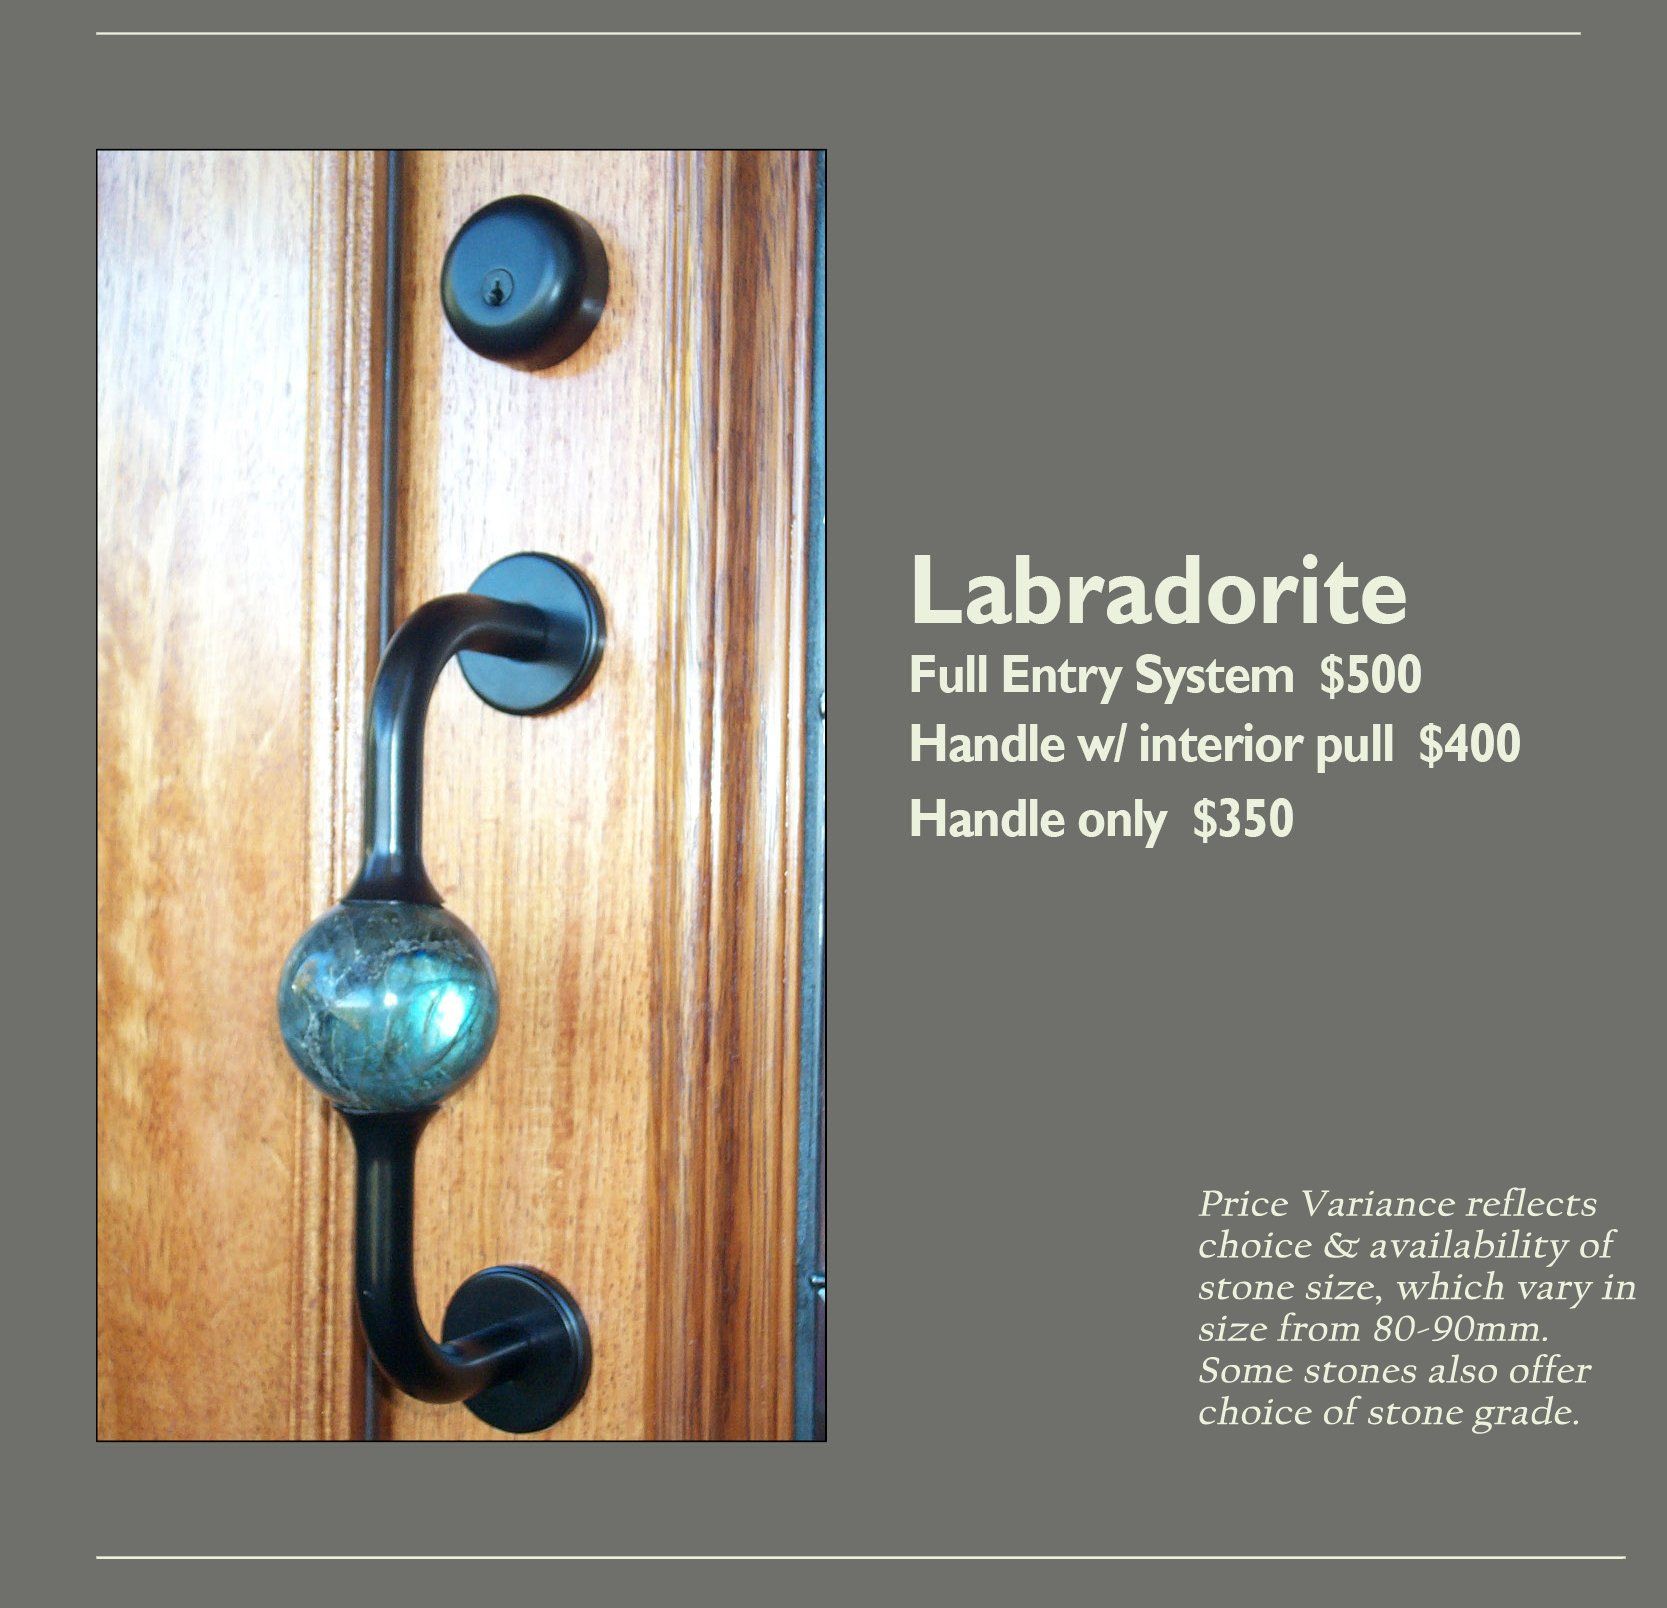 Labradorite Entry Knob Options